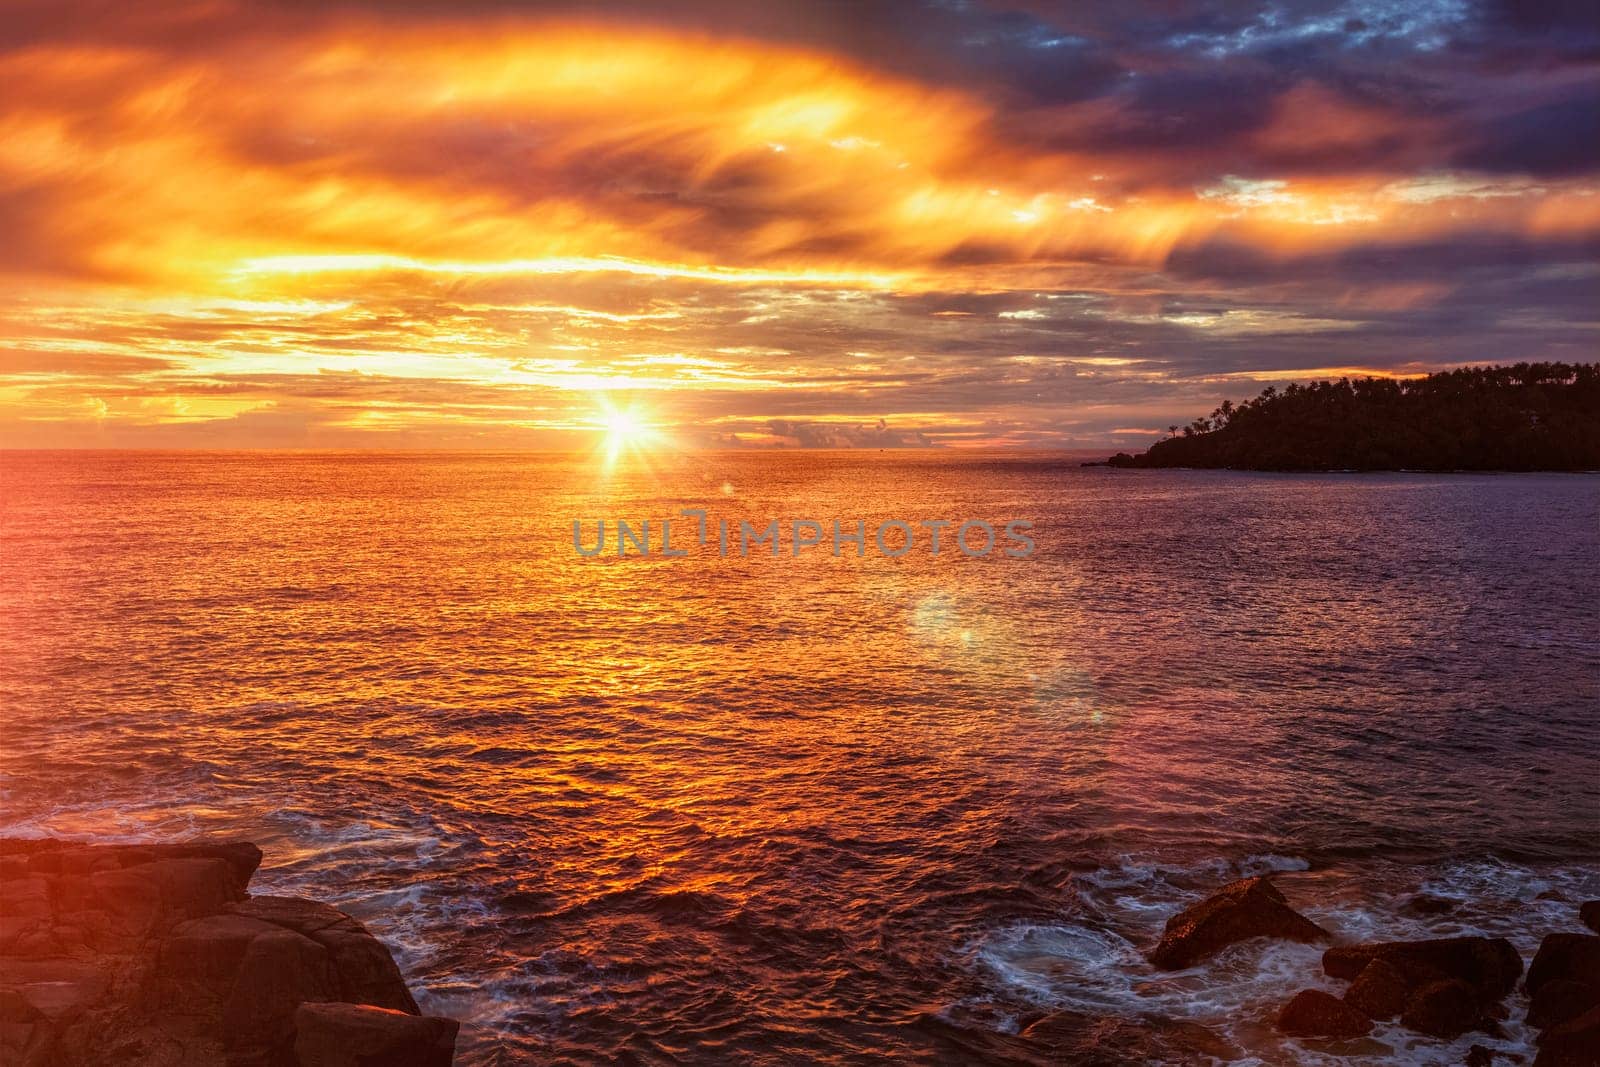 Beach resort vacation holidays background - tropical ocean sunset with dramatic sky. Mirissa, Sri Lanka